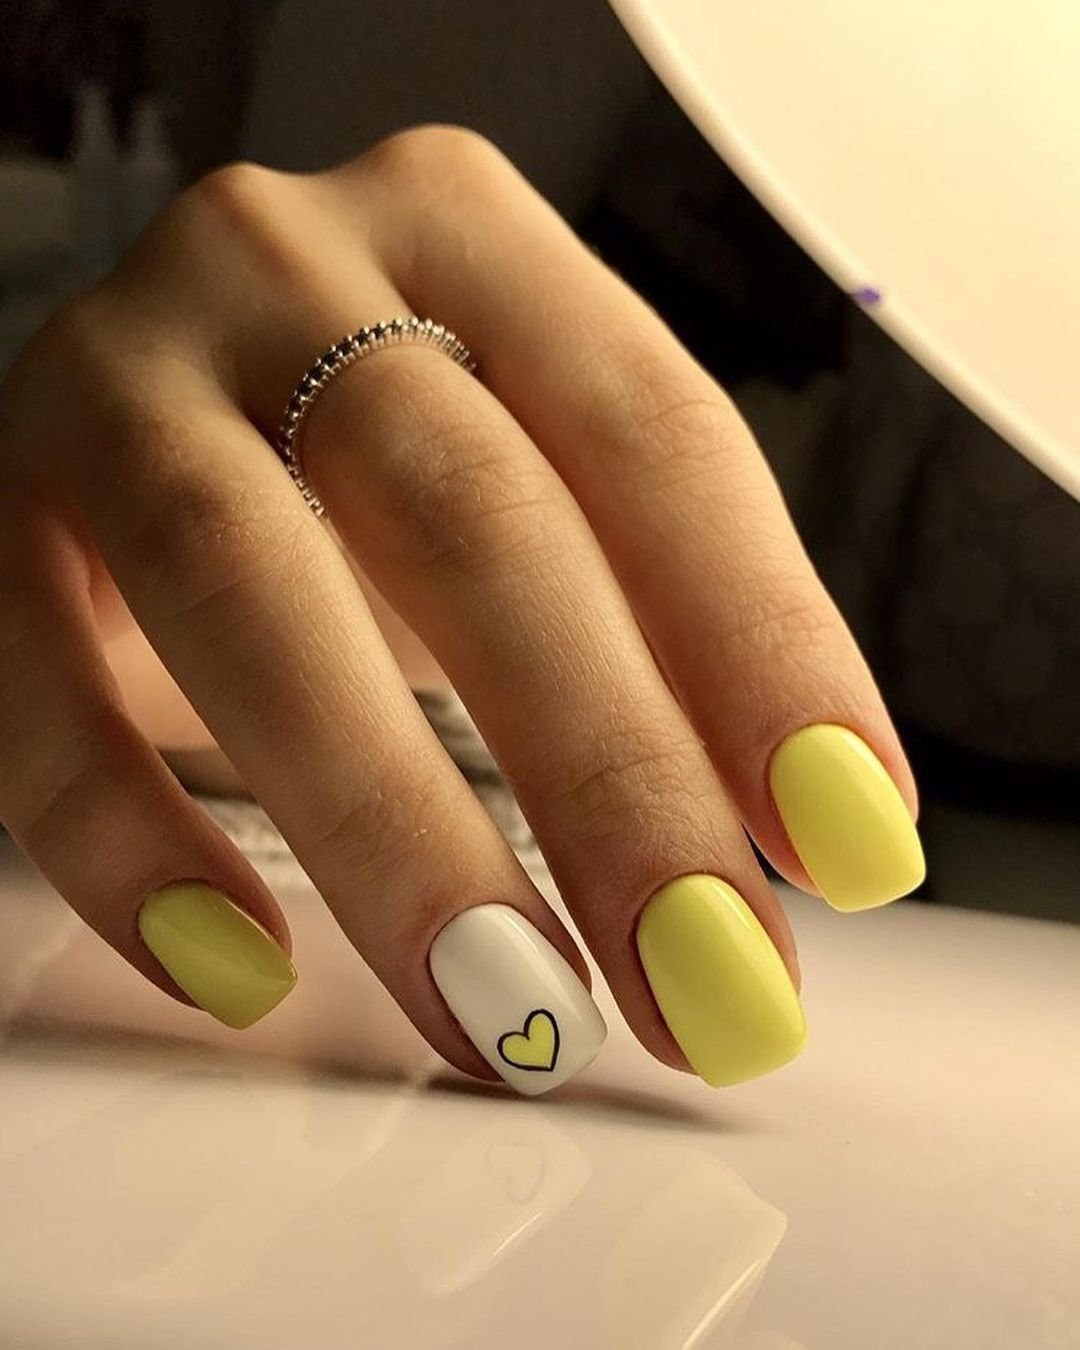 Лимонный дизайн ногтей. Желтый маникюр. Летний маникюр желтый. Маникюр желтого цвета летний. Маникюр шеллак желтый.